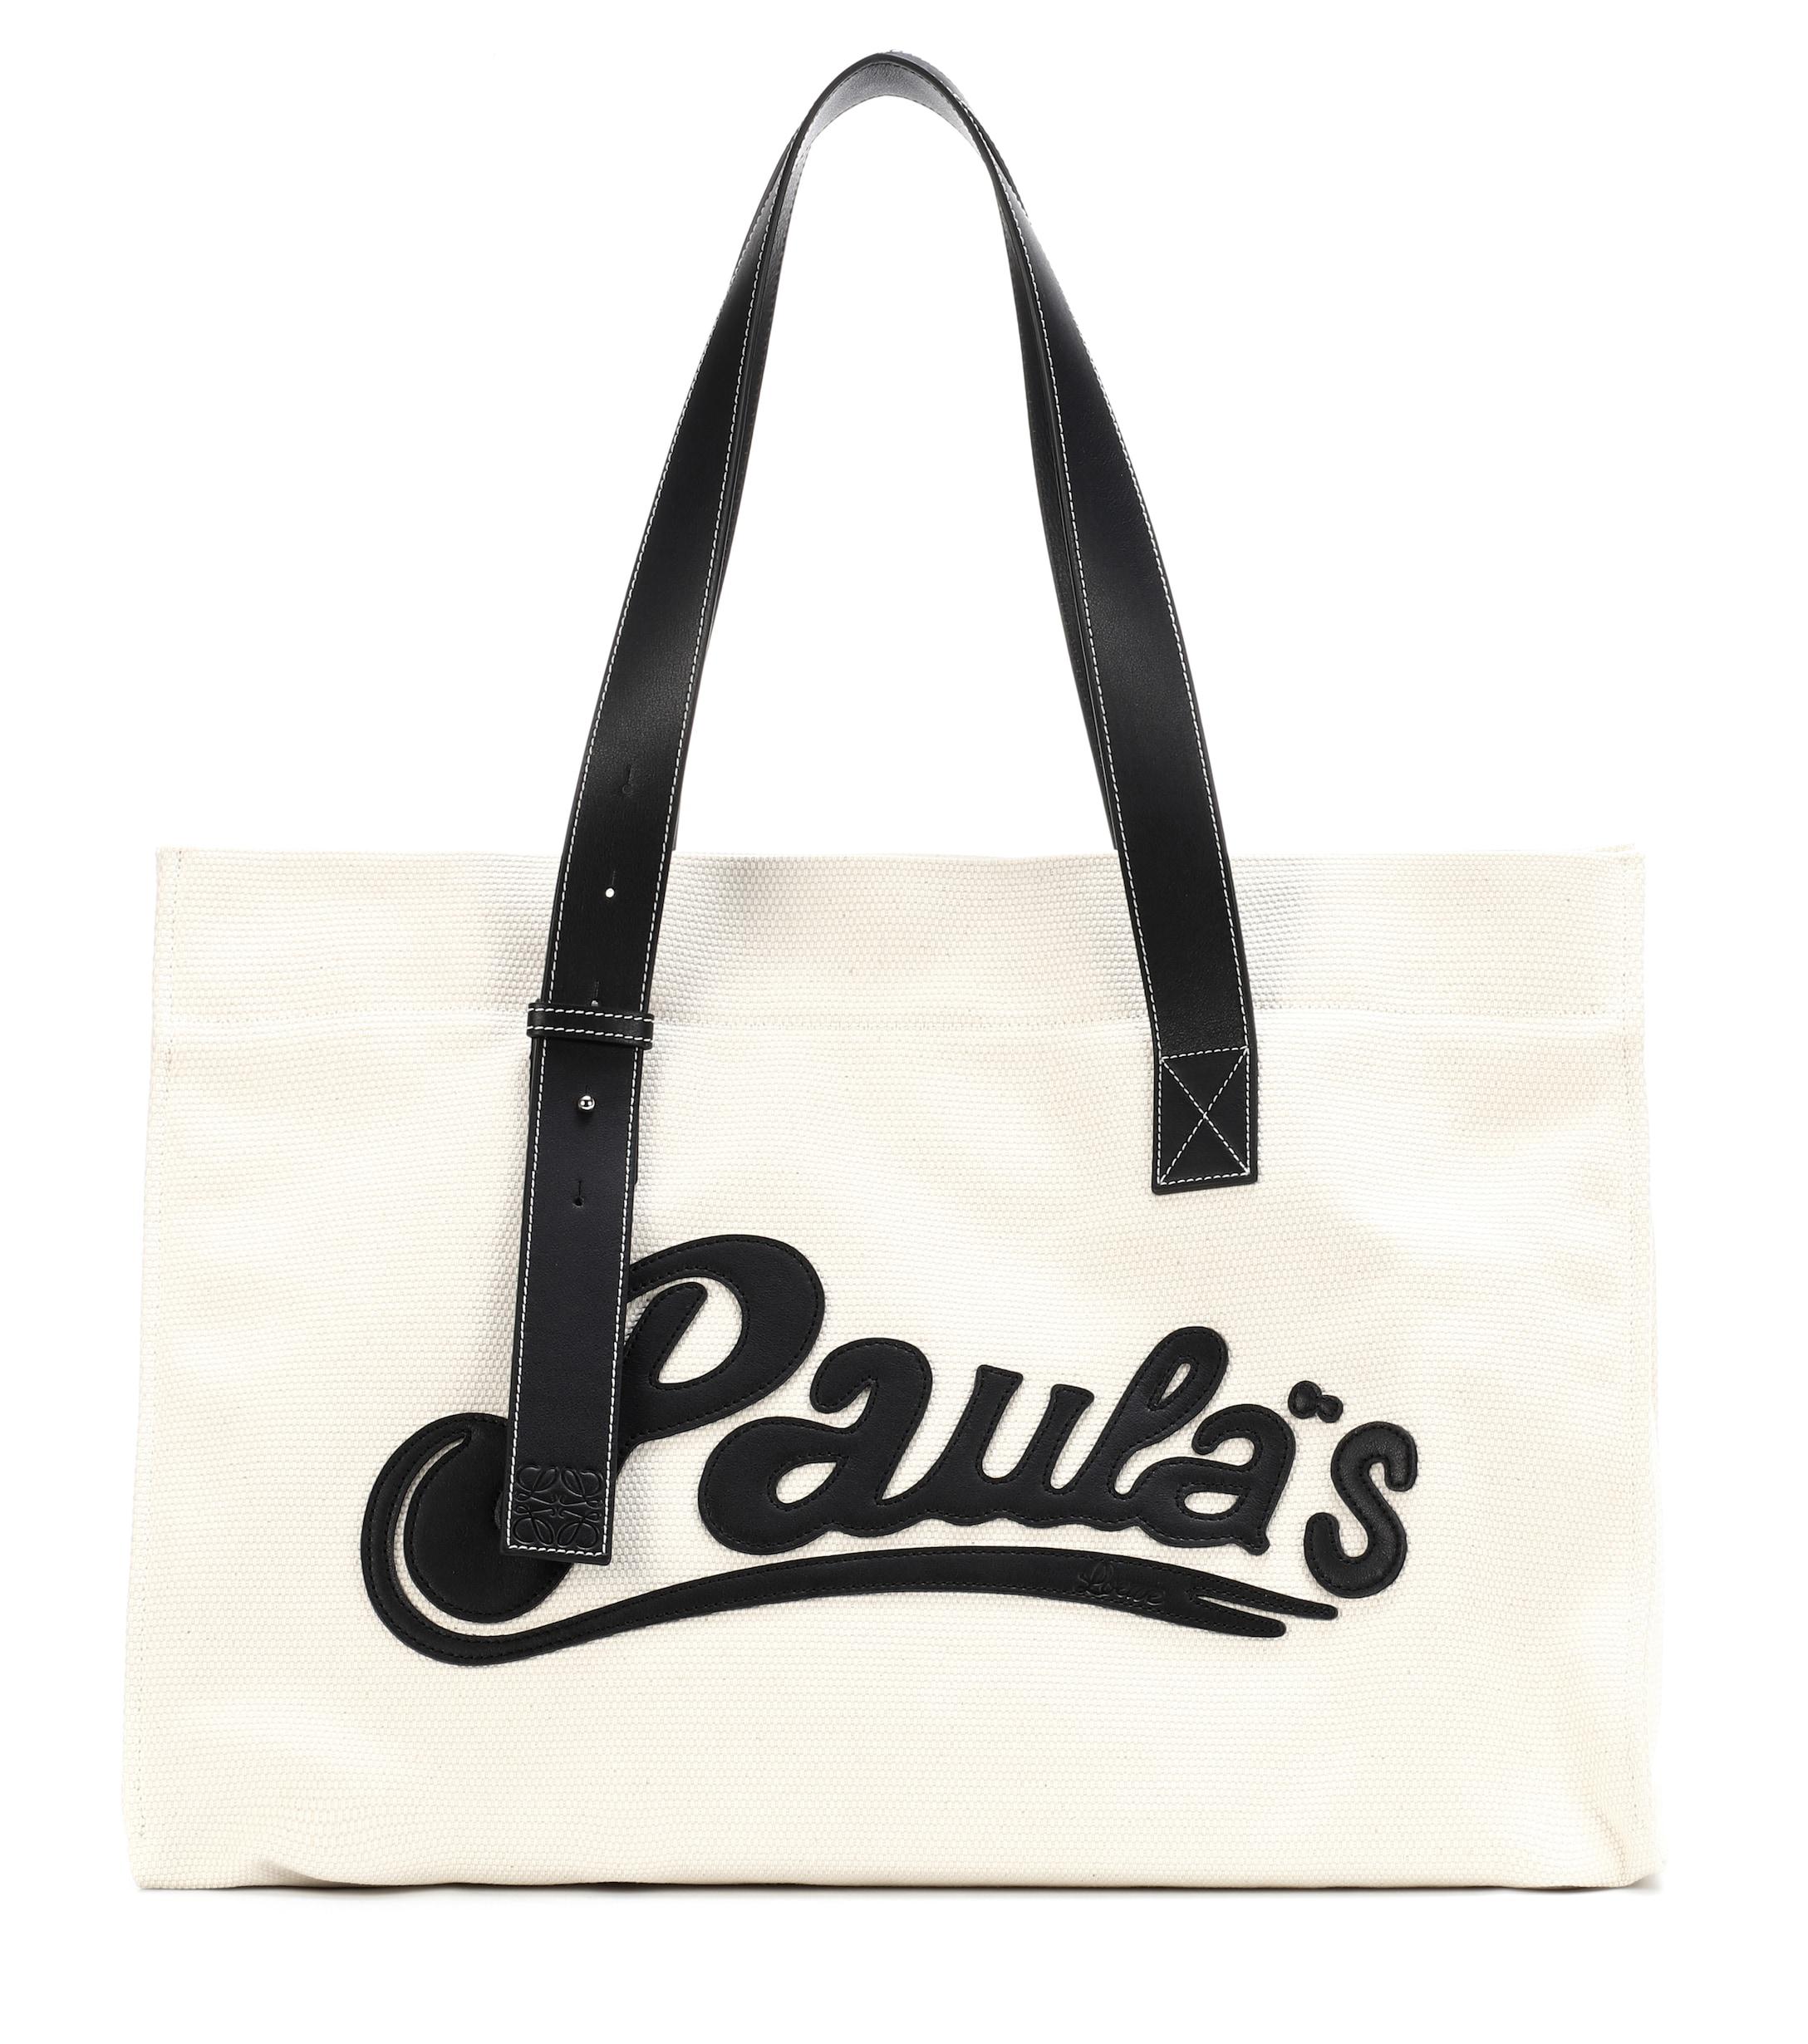 loewe paula's bag